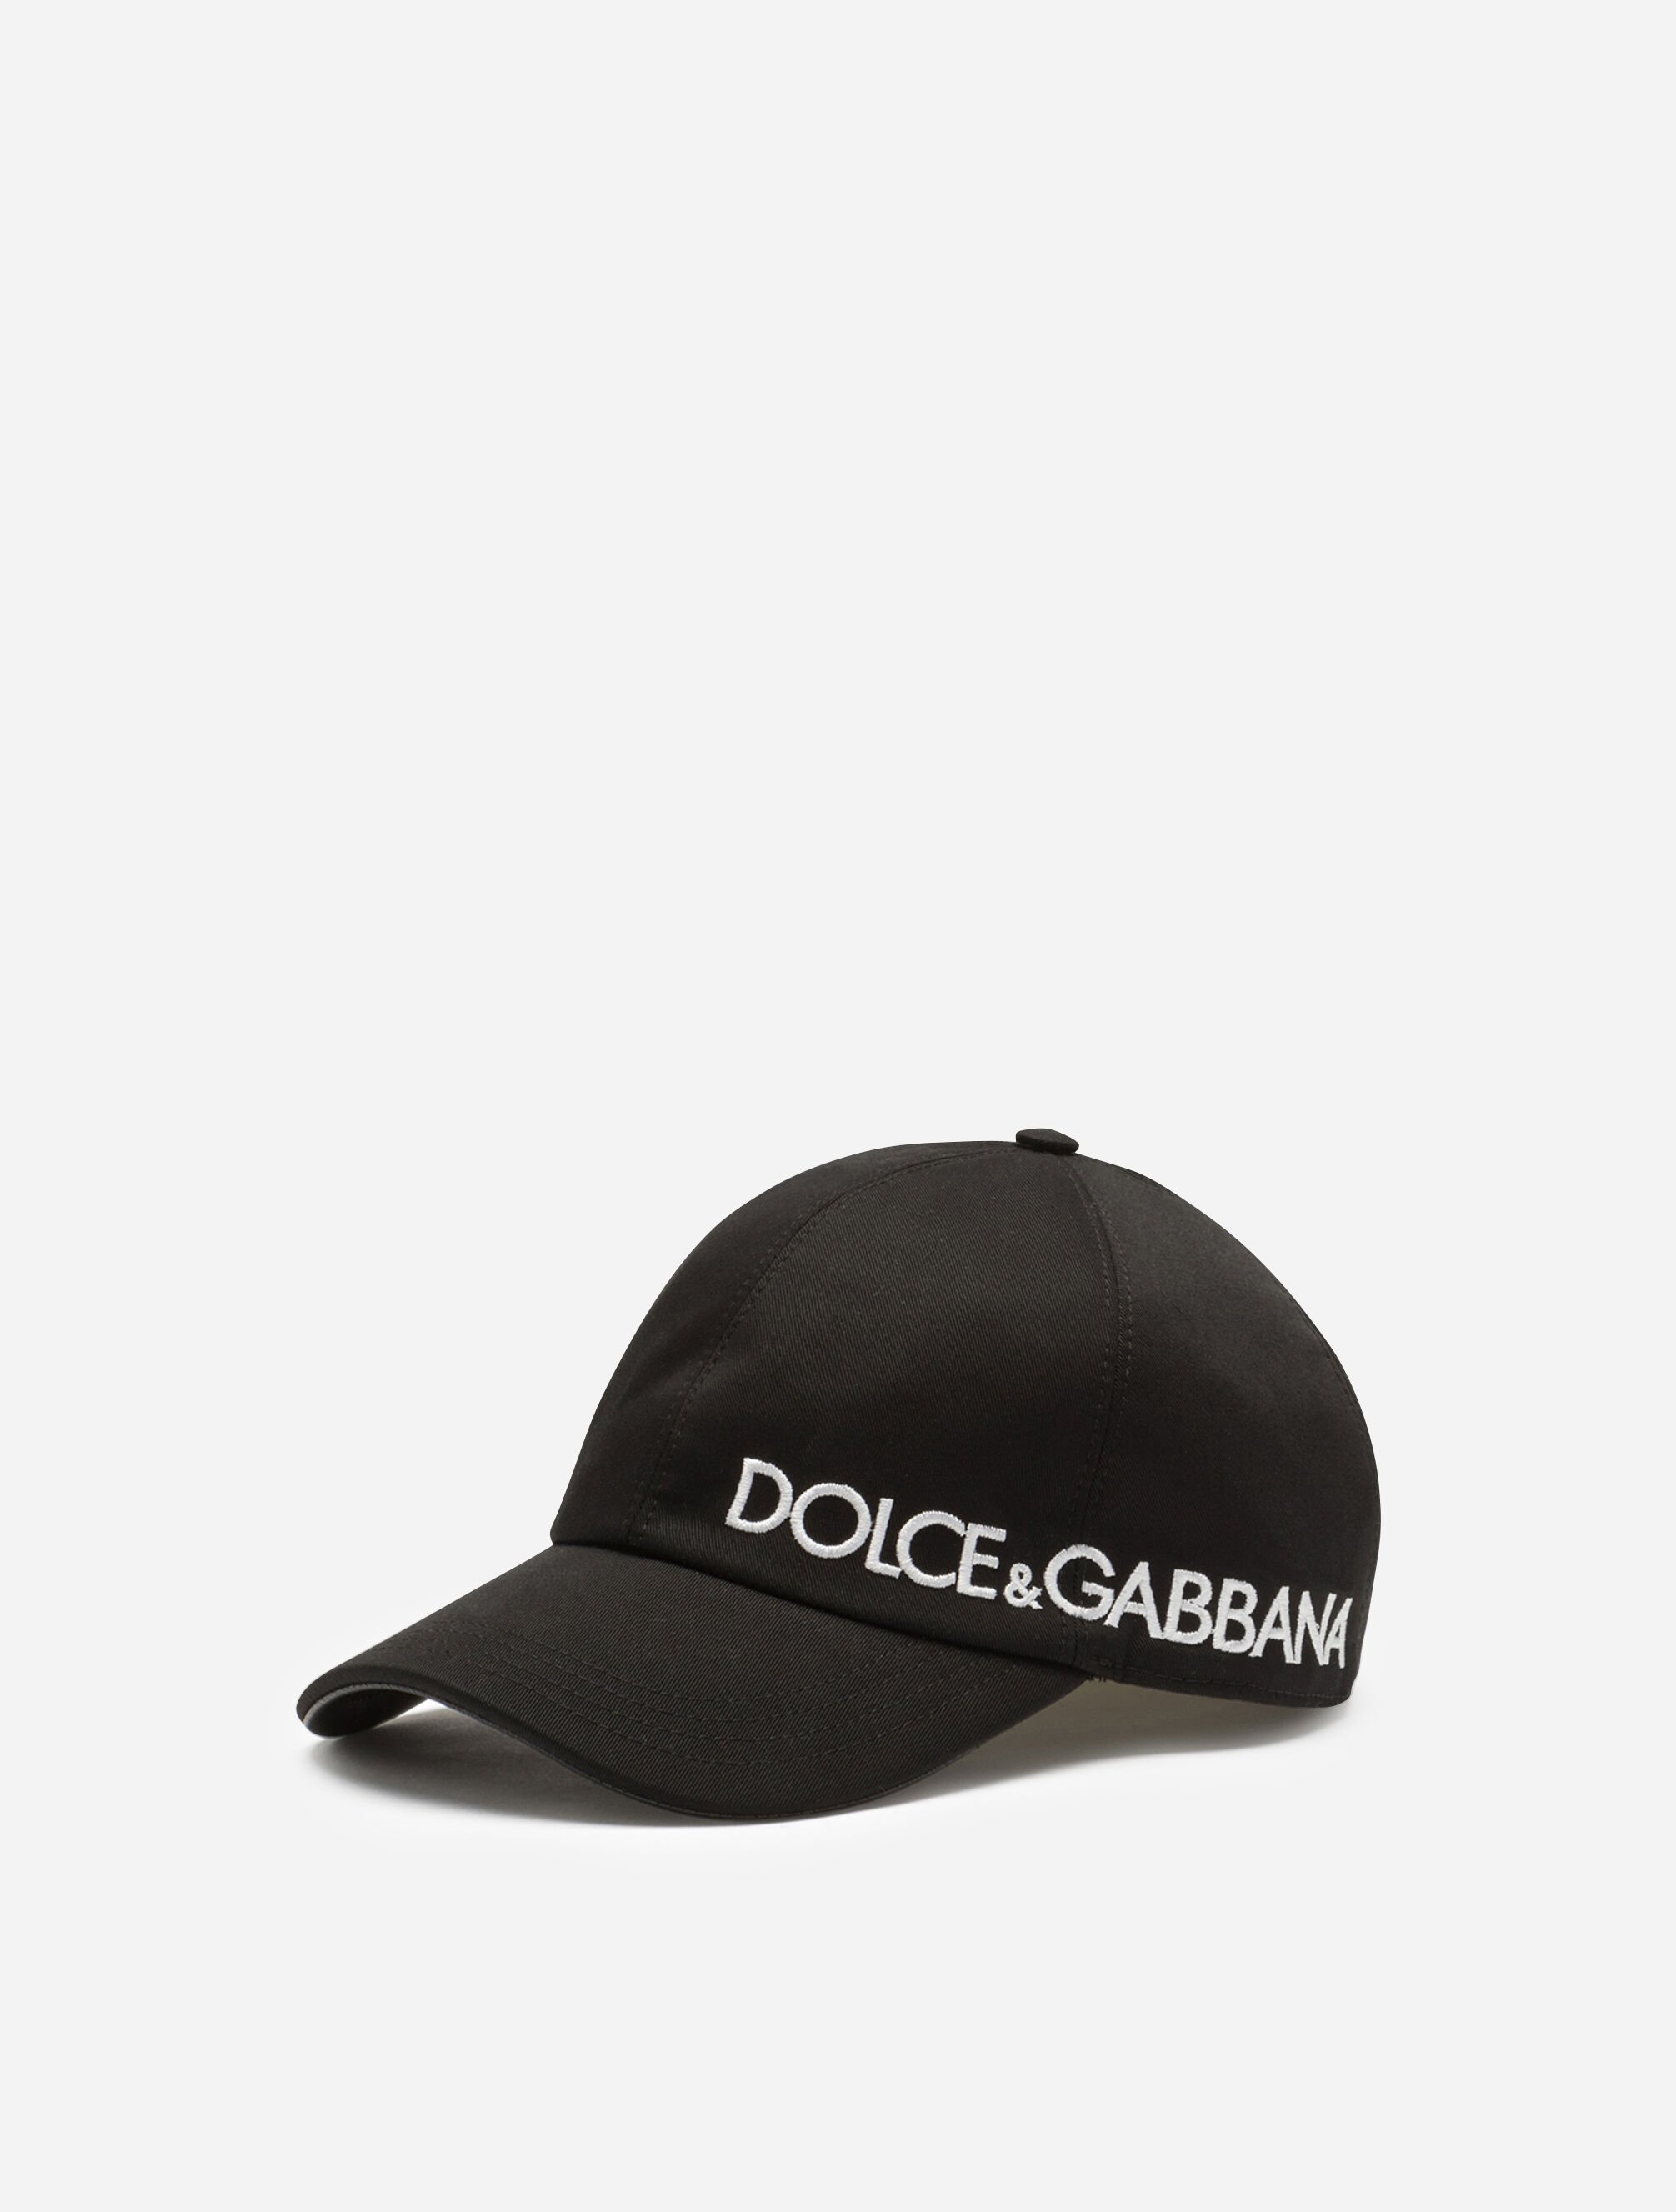 DolceGabbanaSpa Dolce&Gabbana baseball cap with embroidery Azure L1JWHMG7KR1